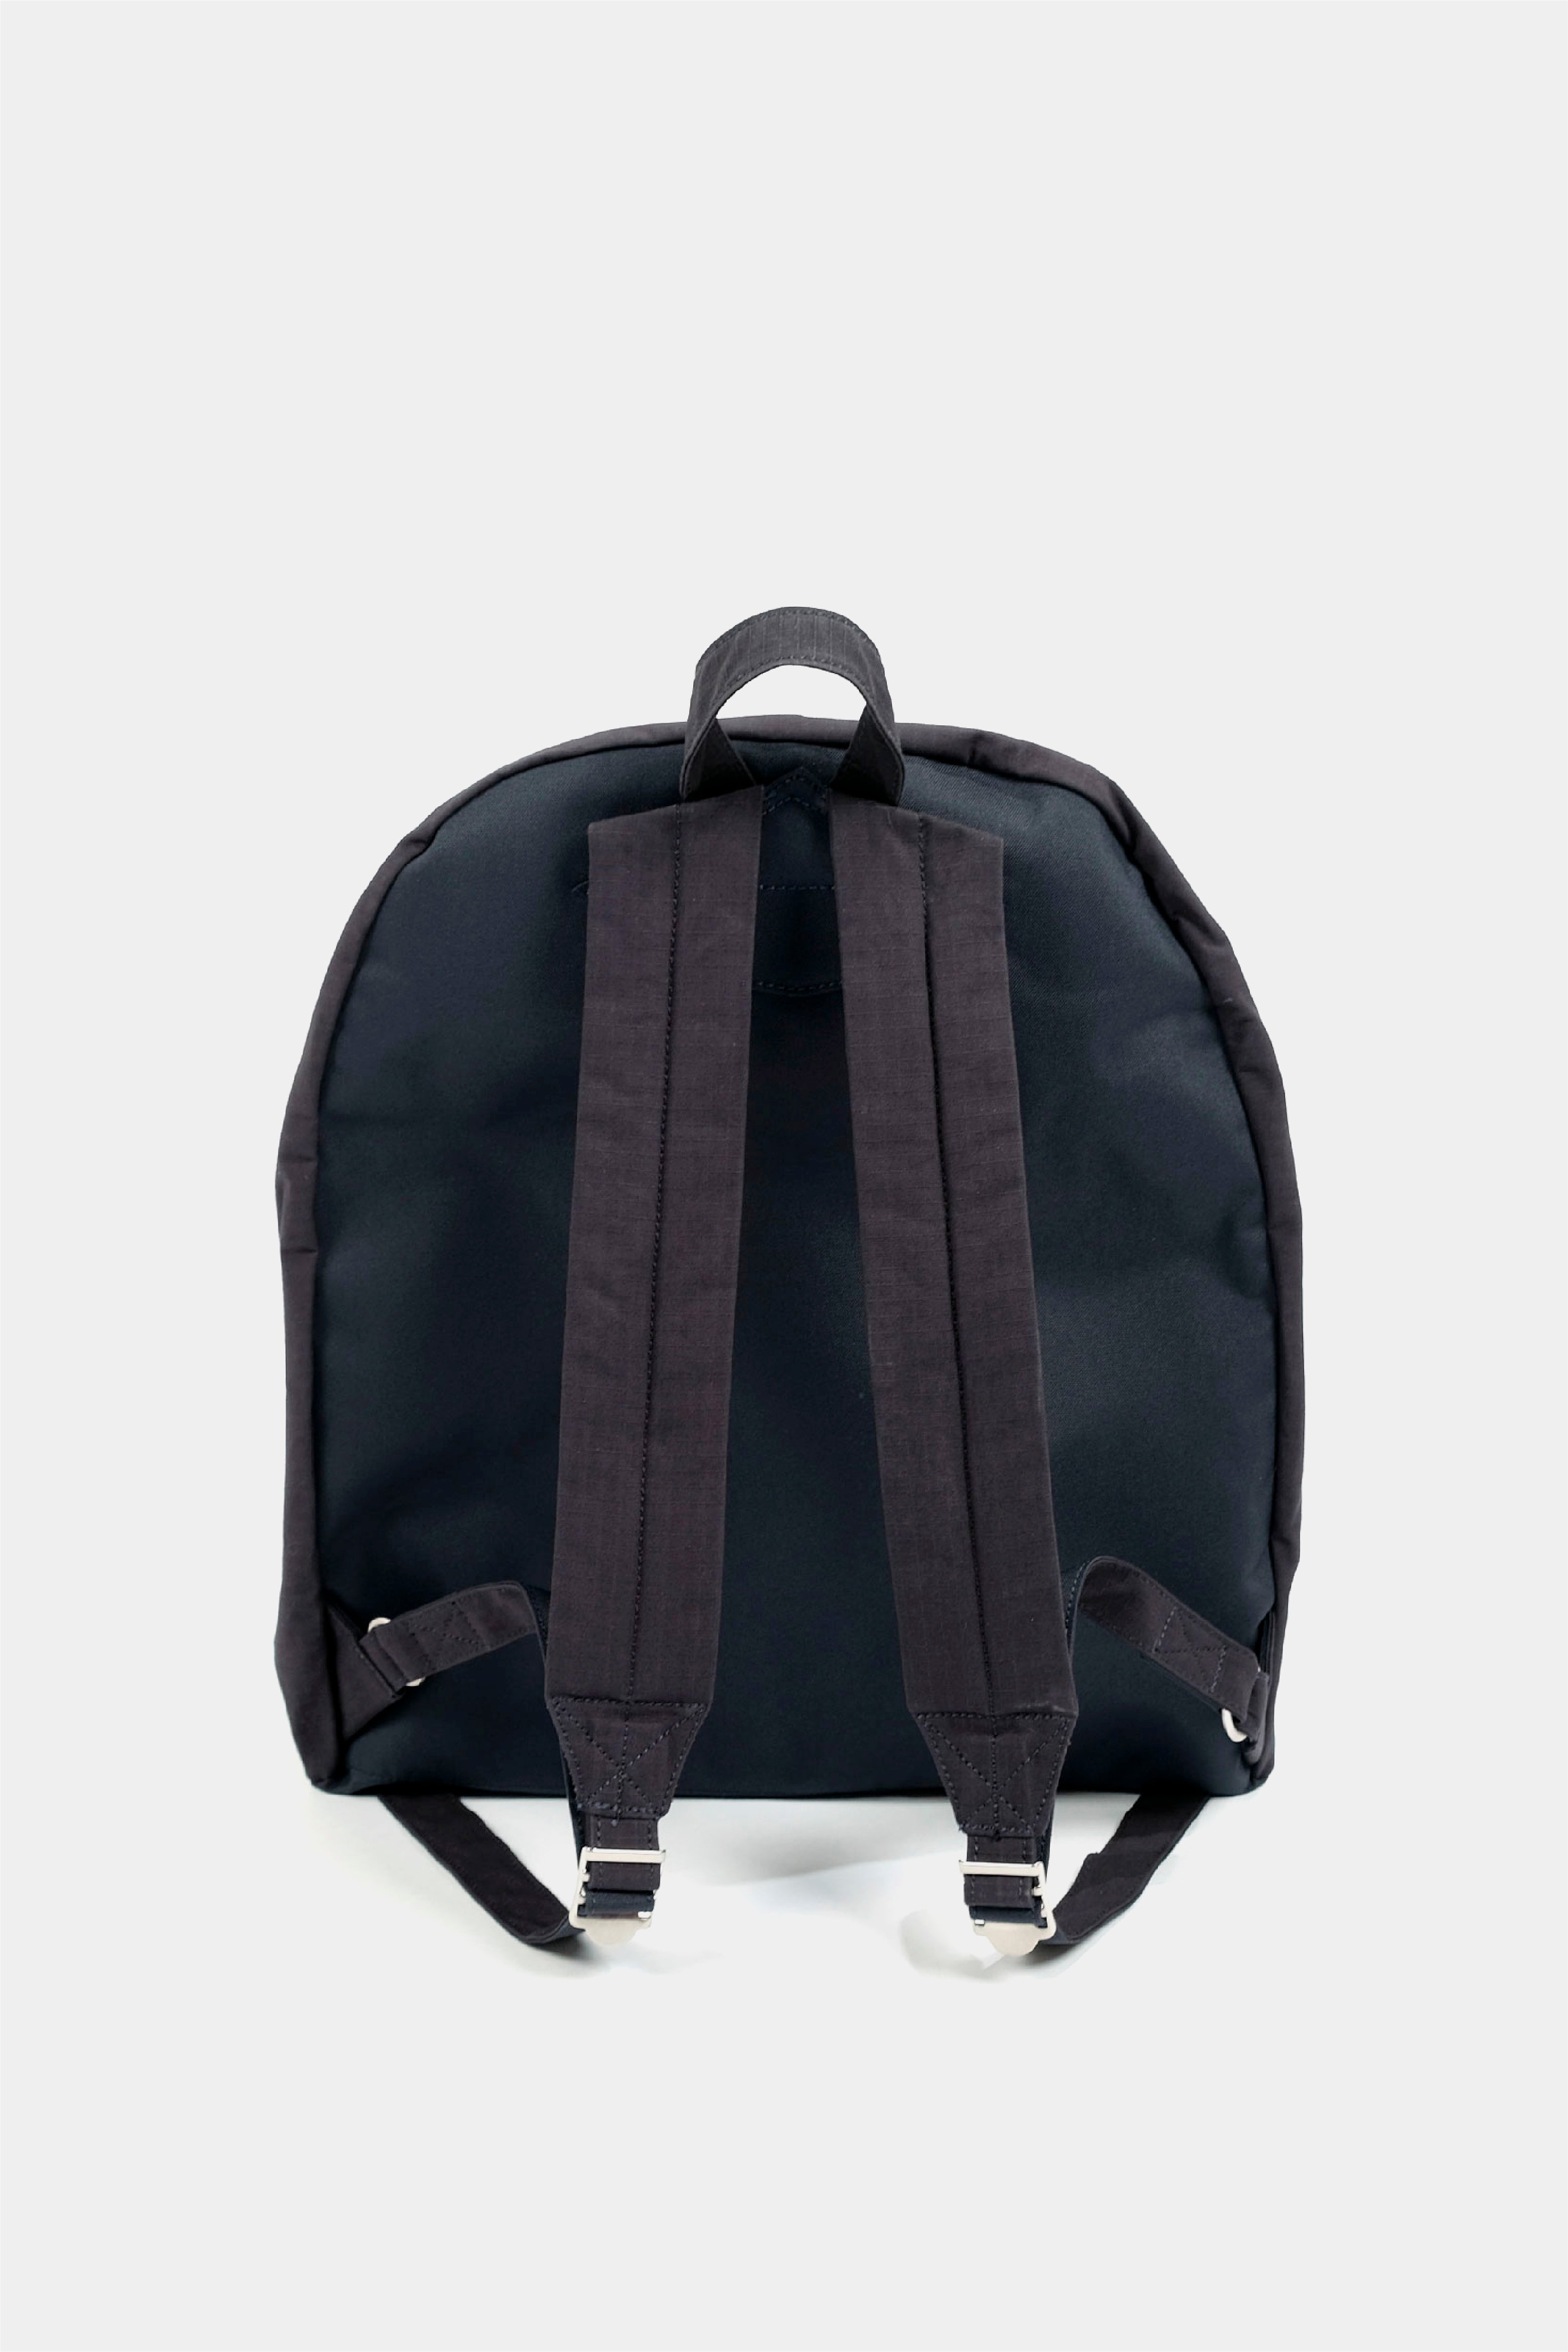 Selectshop FRAME - NANAMICA Day Pack Bag All-Accessories Concept Store Dubai